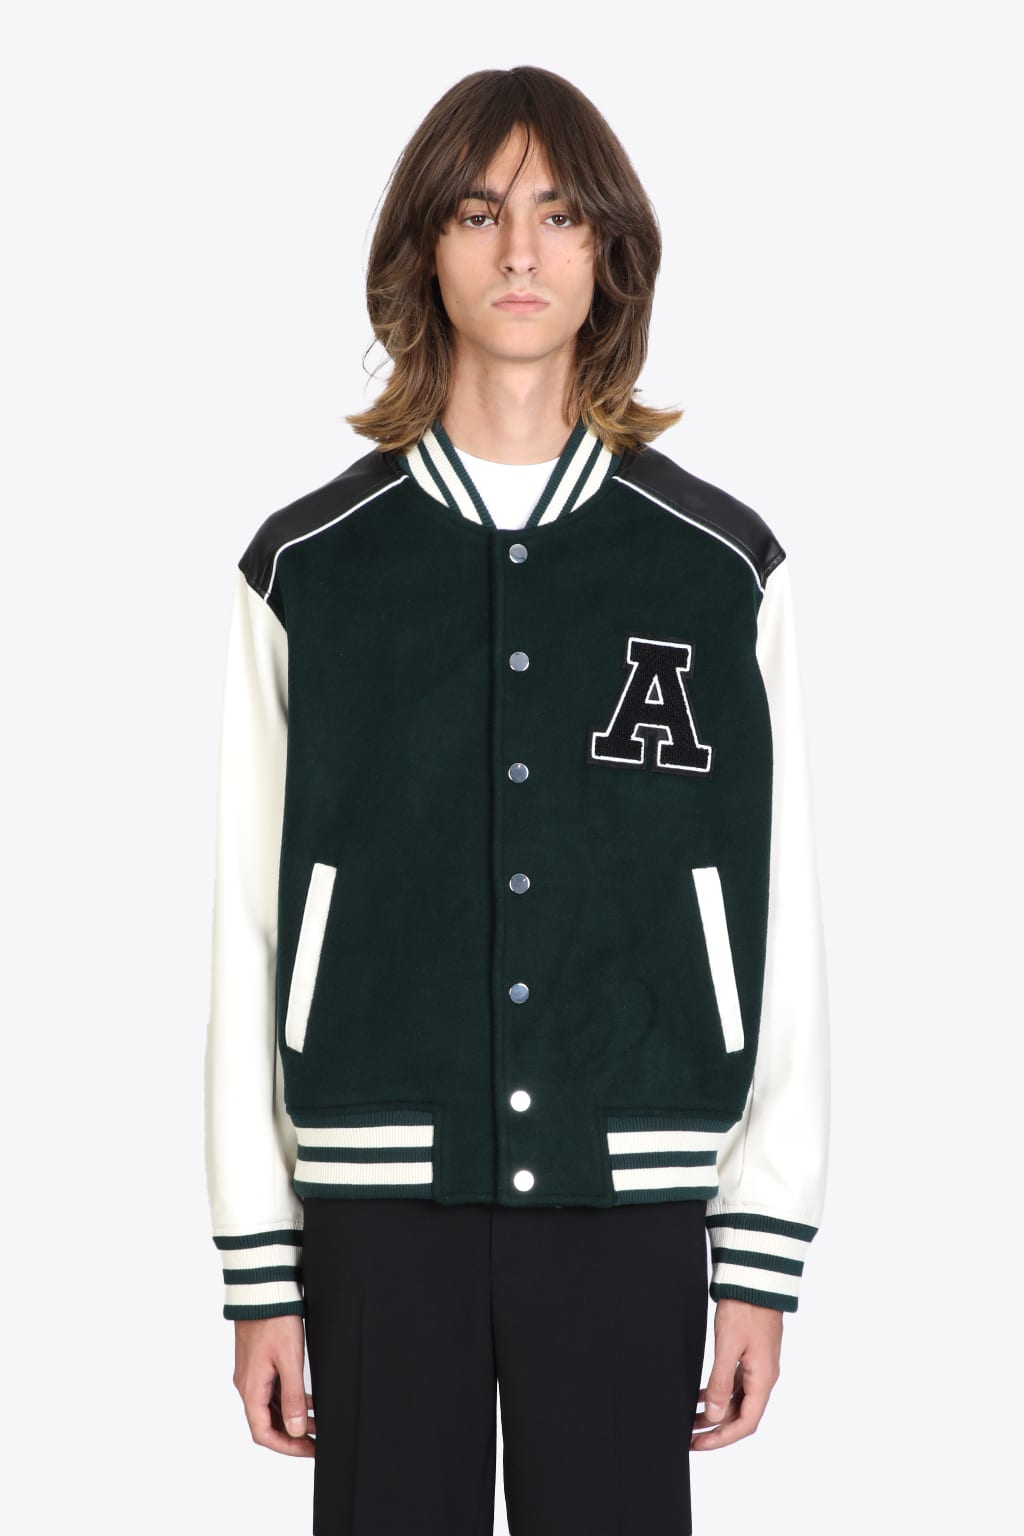 Axel Arigato Ivy Varsity Jacket Dark green wool varsity jacket - Ivy varsity jacket